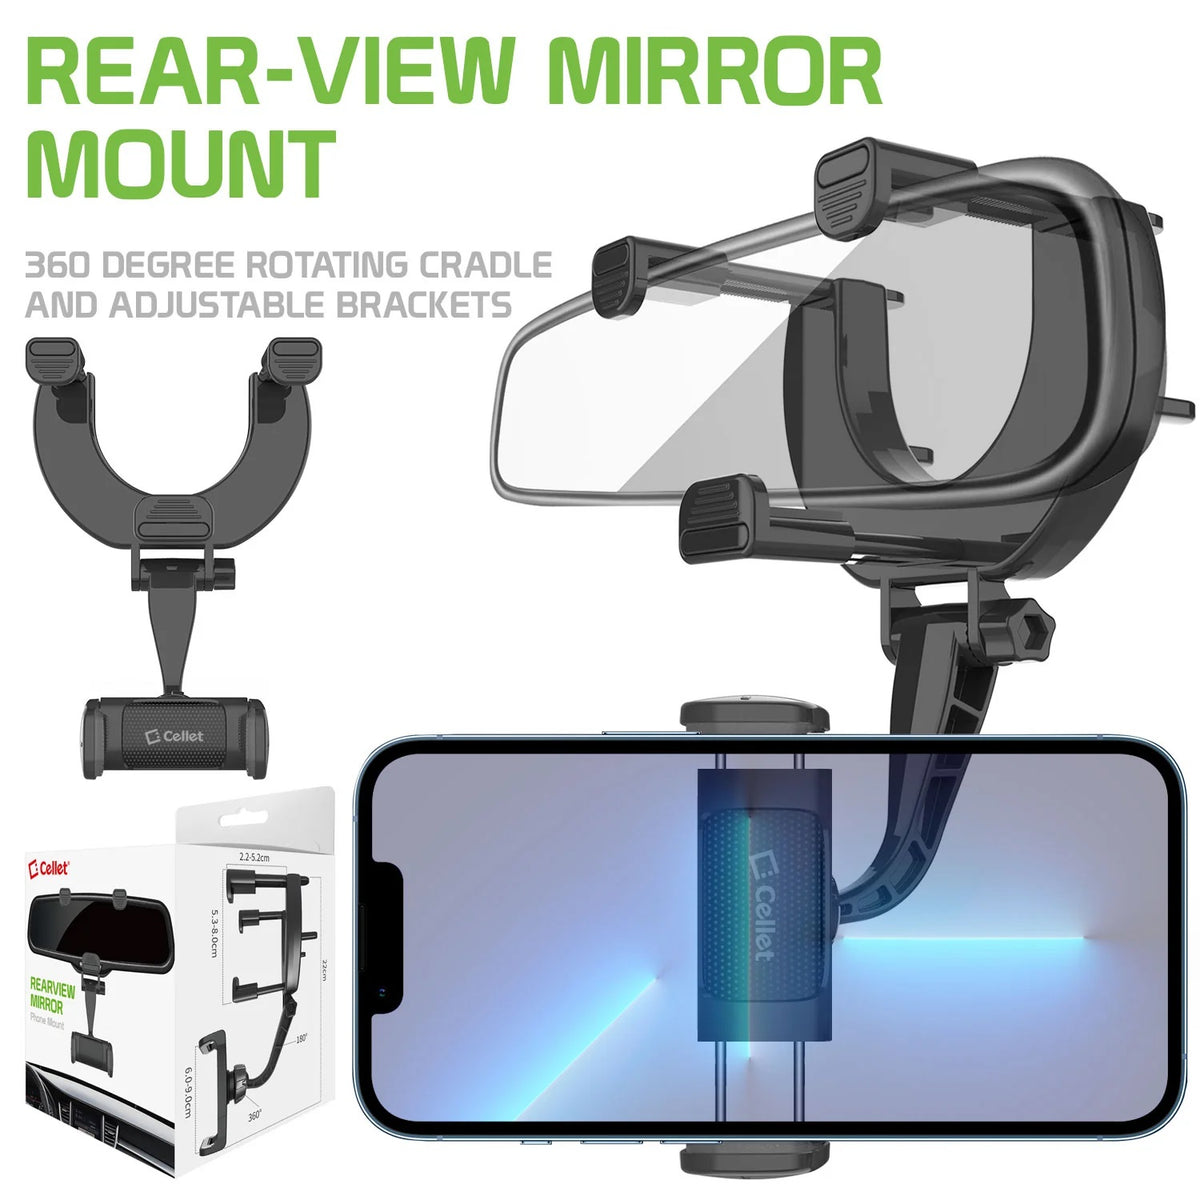 Cellet Rear-View Mirror Mount